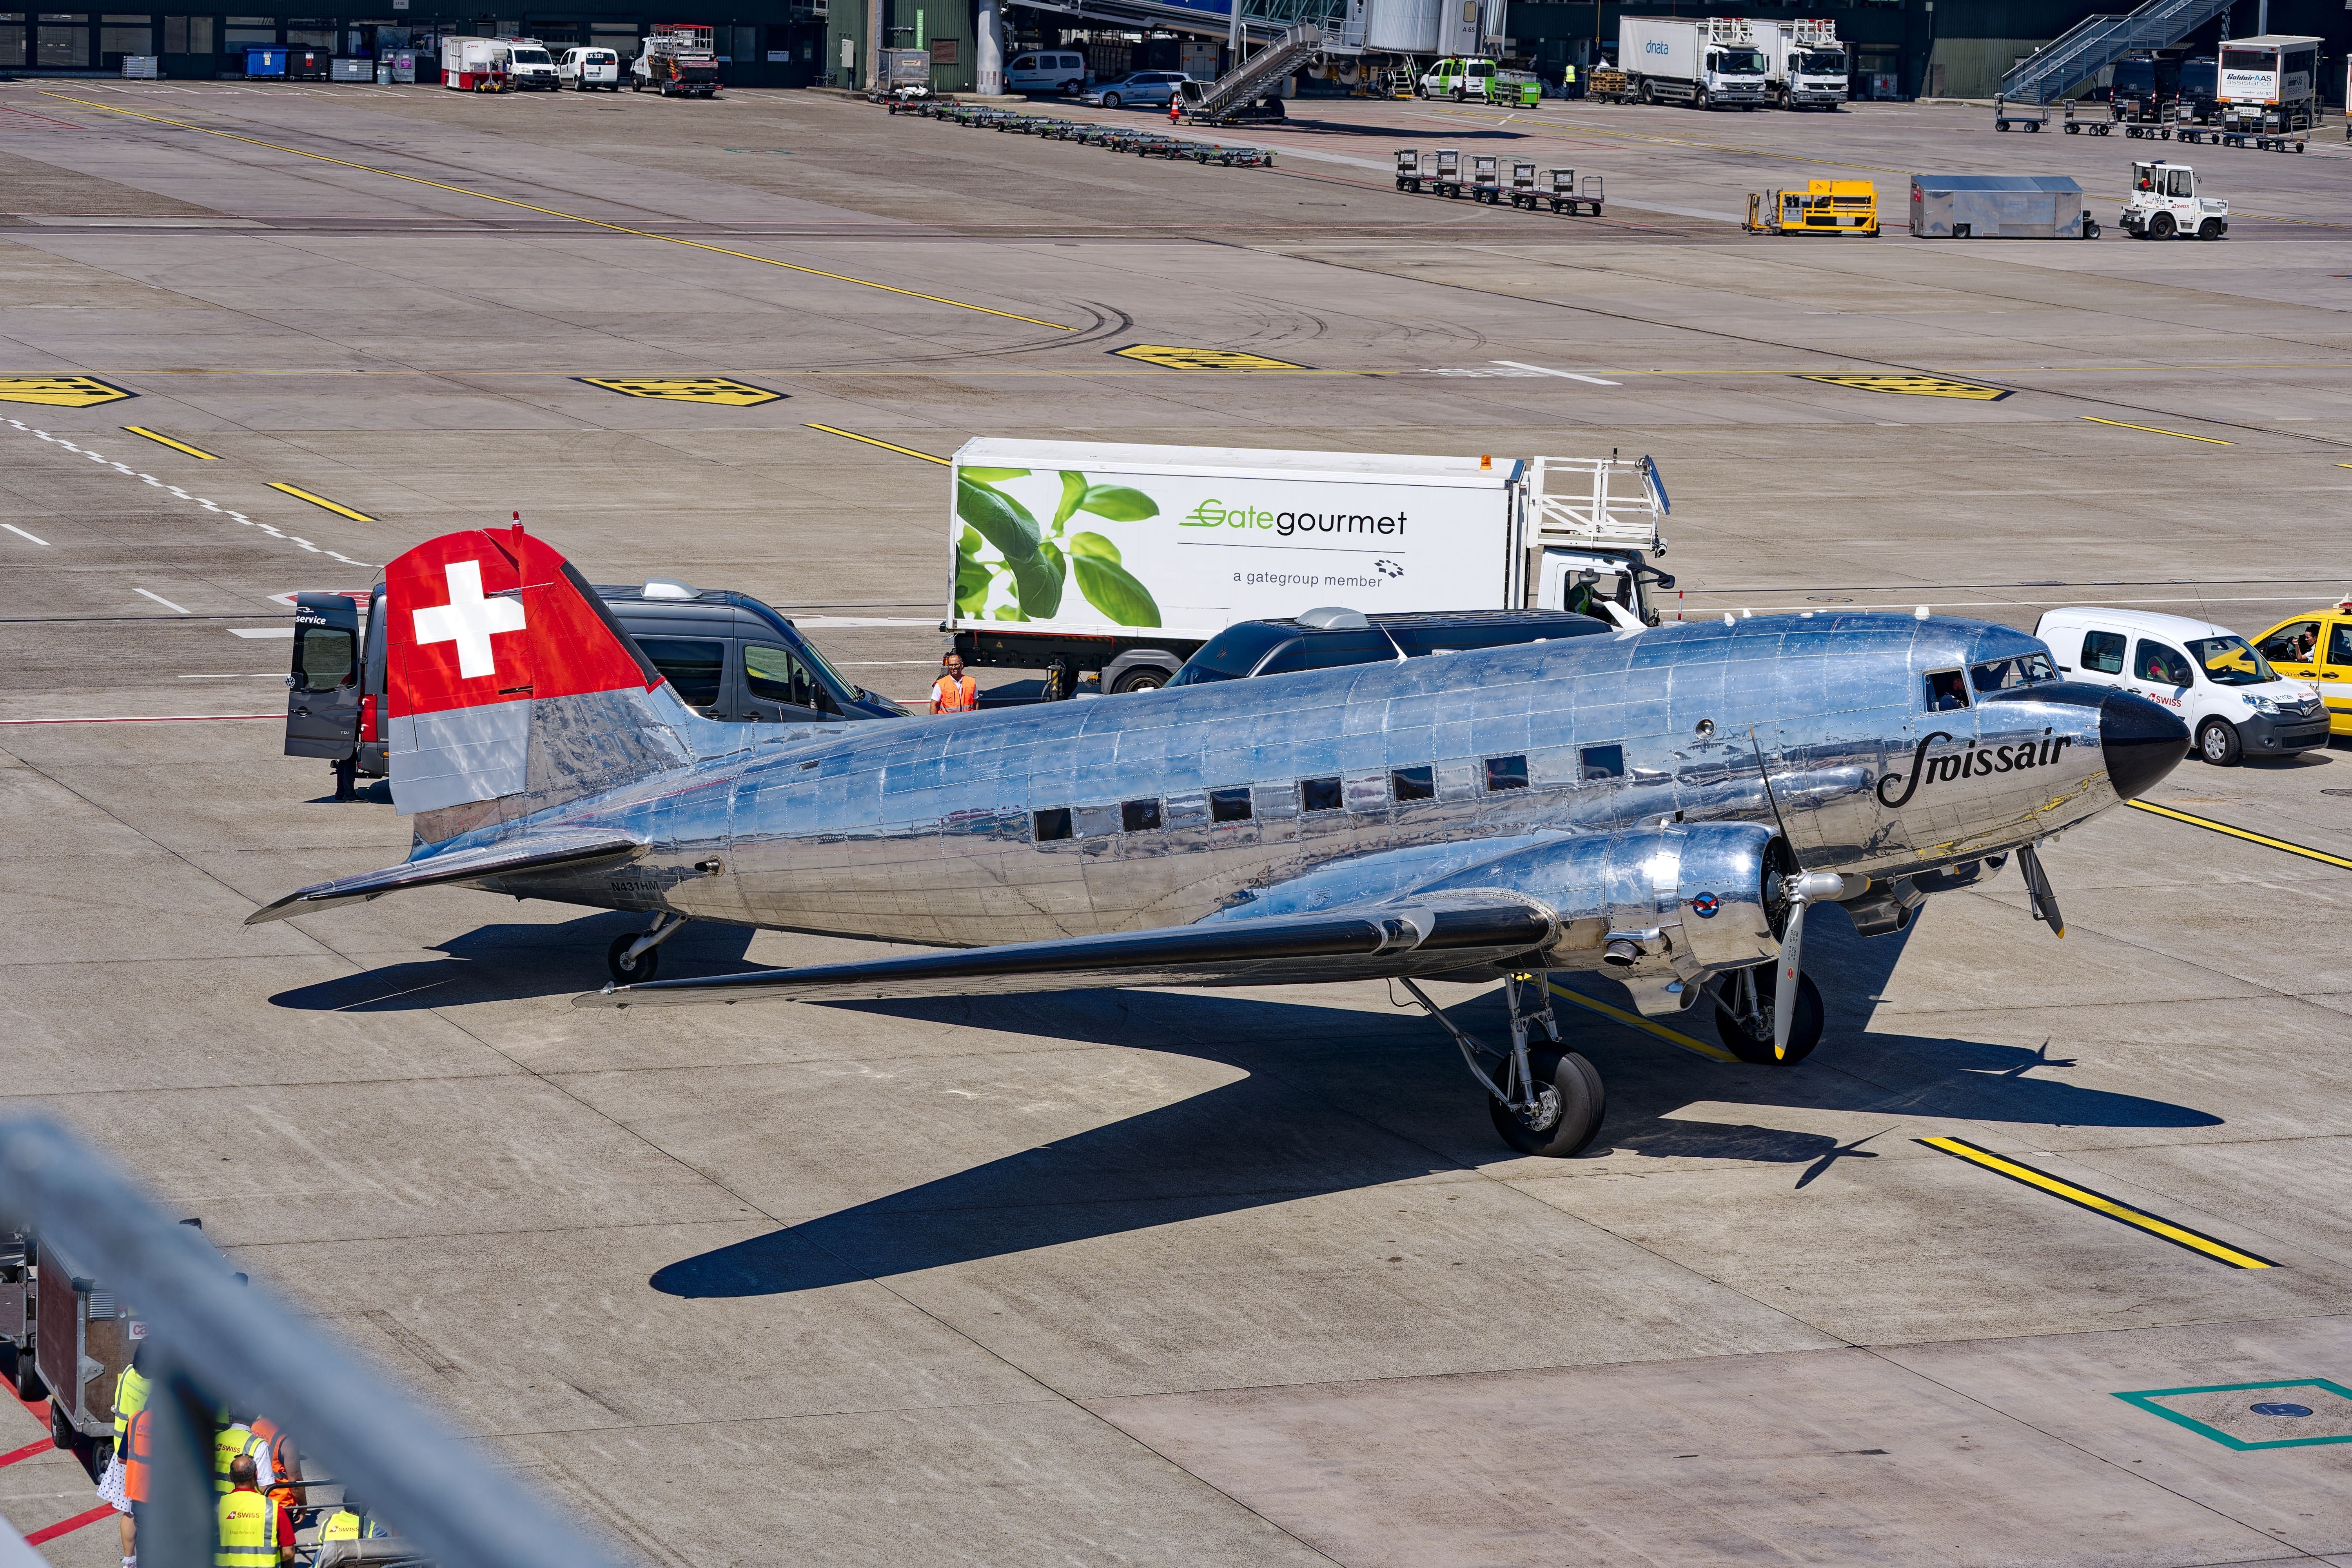 A SWISS Douglas DC-3 on an airport apron.